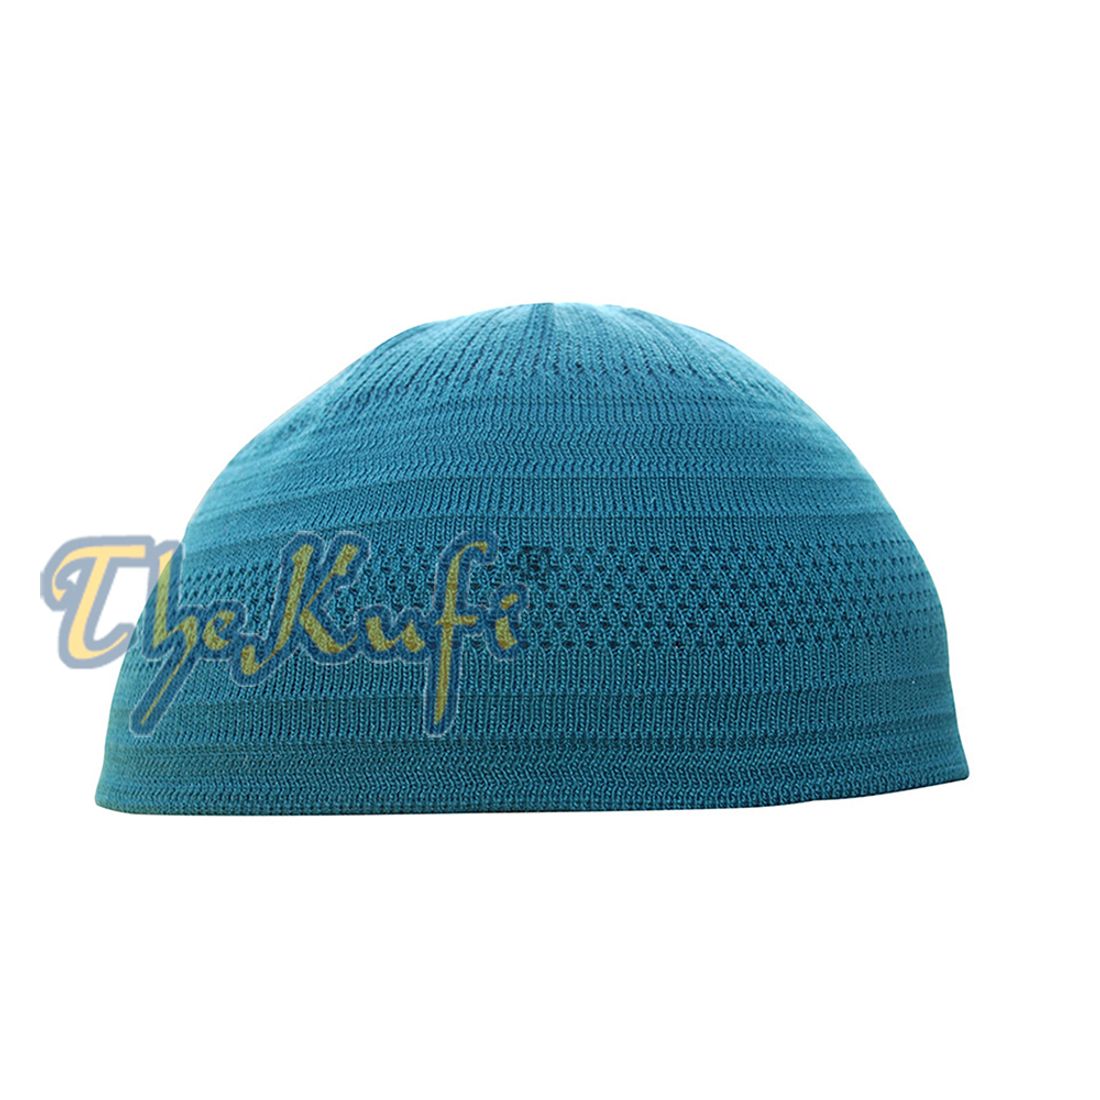 Dark Teal Blue Cotton Stretch-Knit Kufi Hat Skull Cap